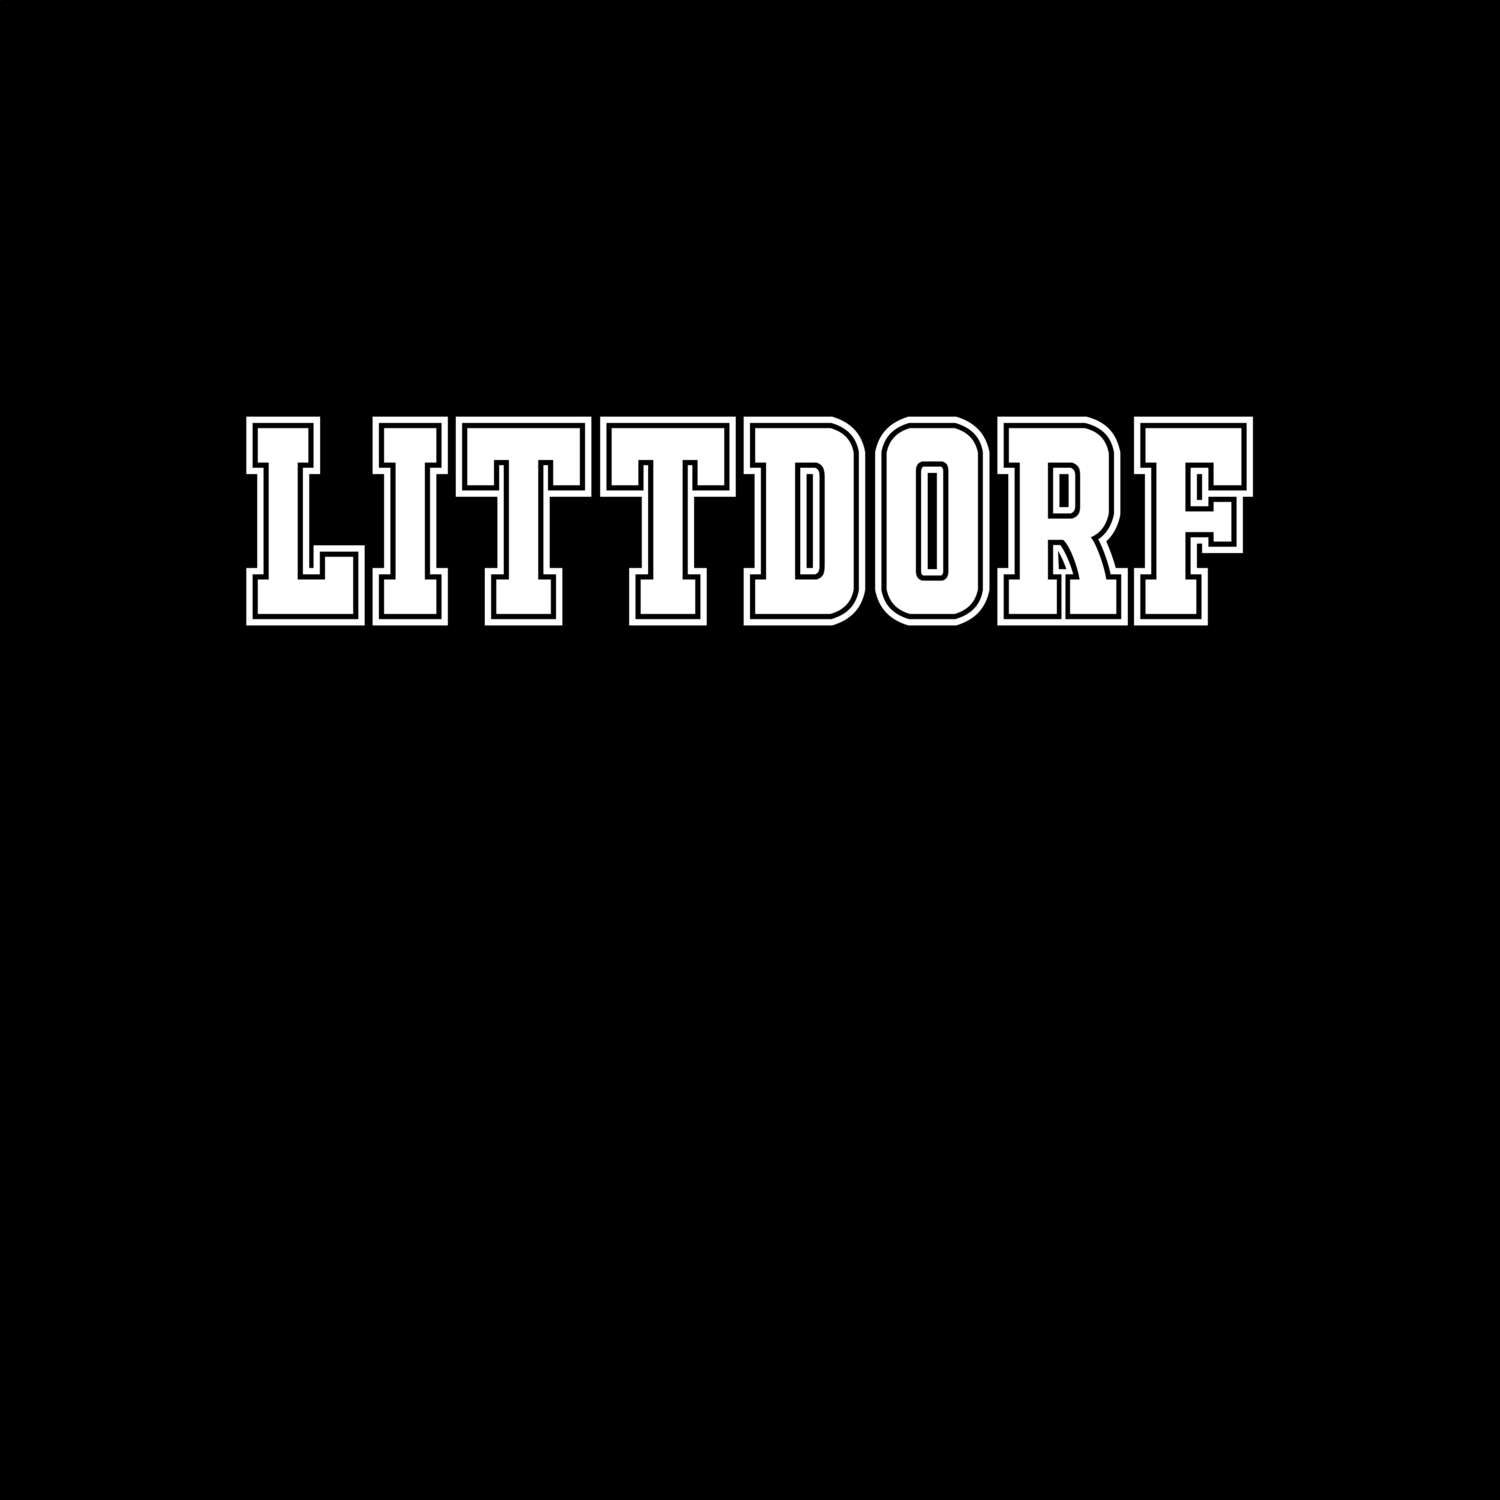 Littdorf T-Shirt »Classic«